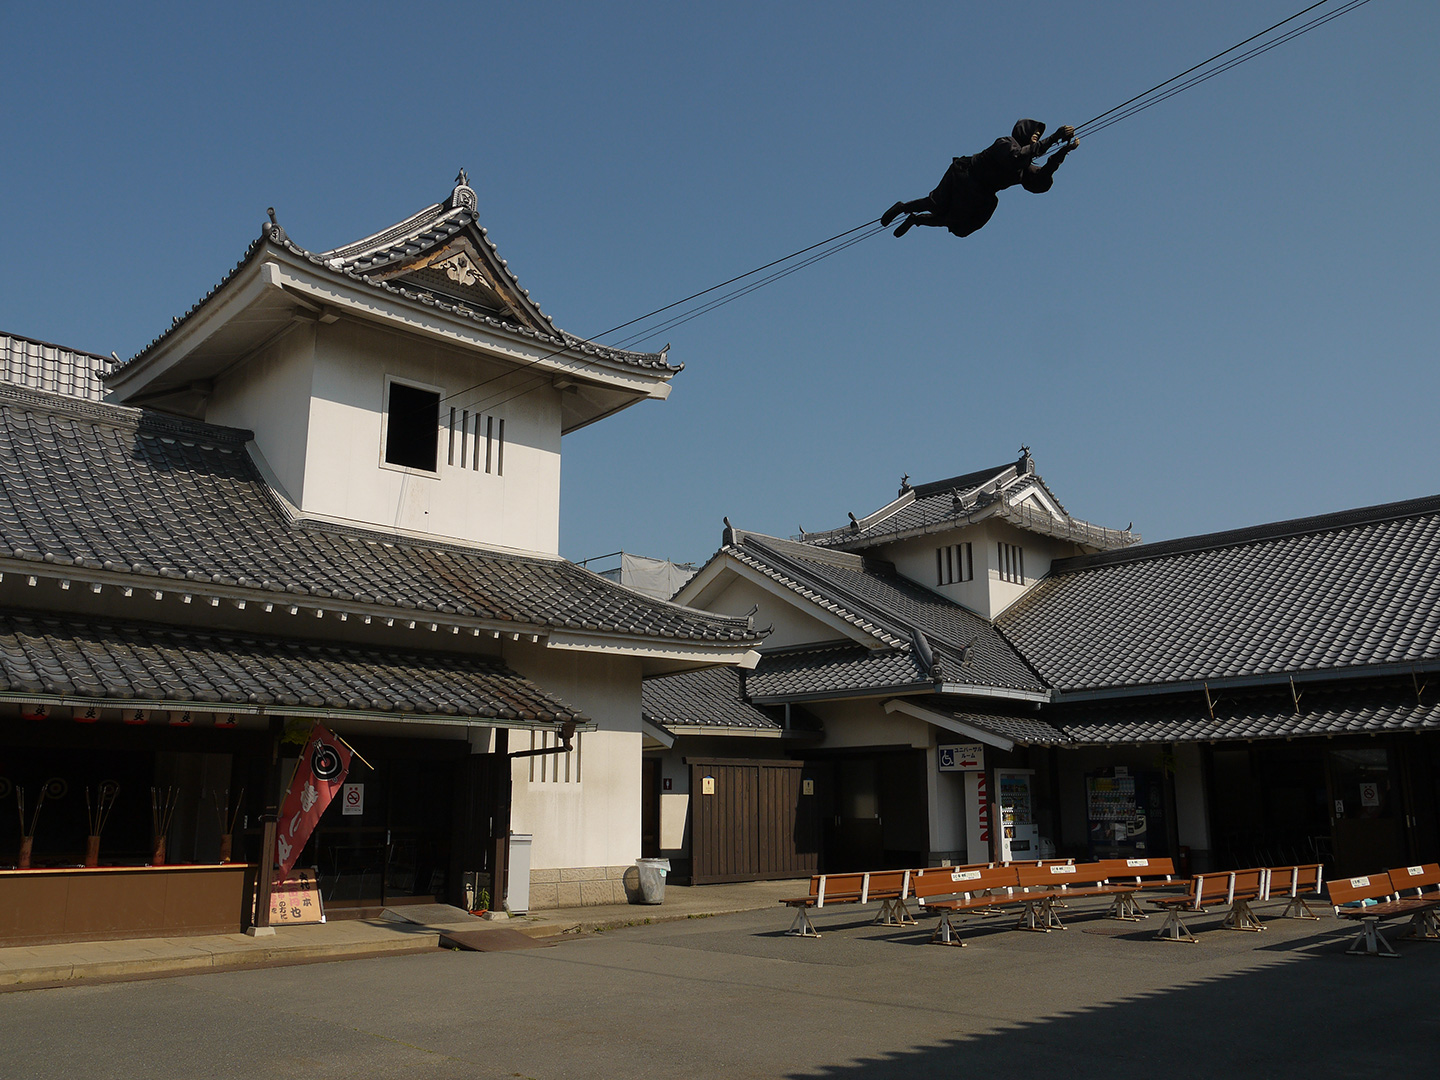 ninja traveling on high wire